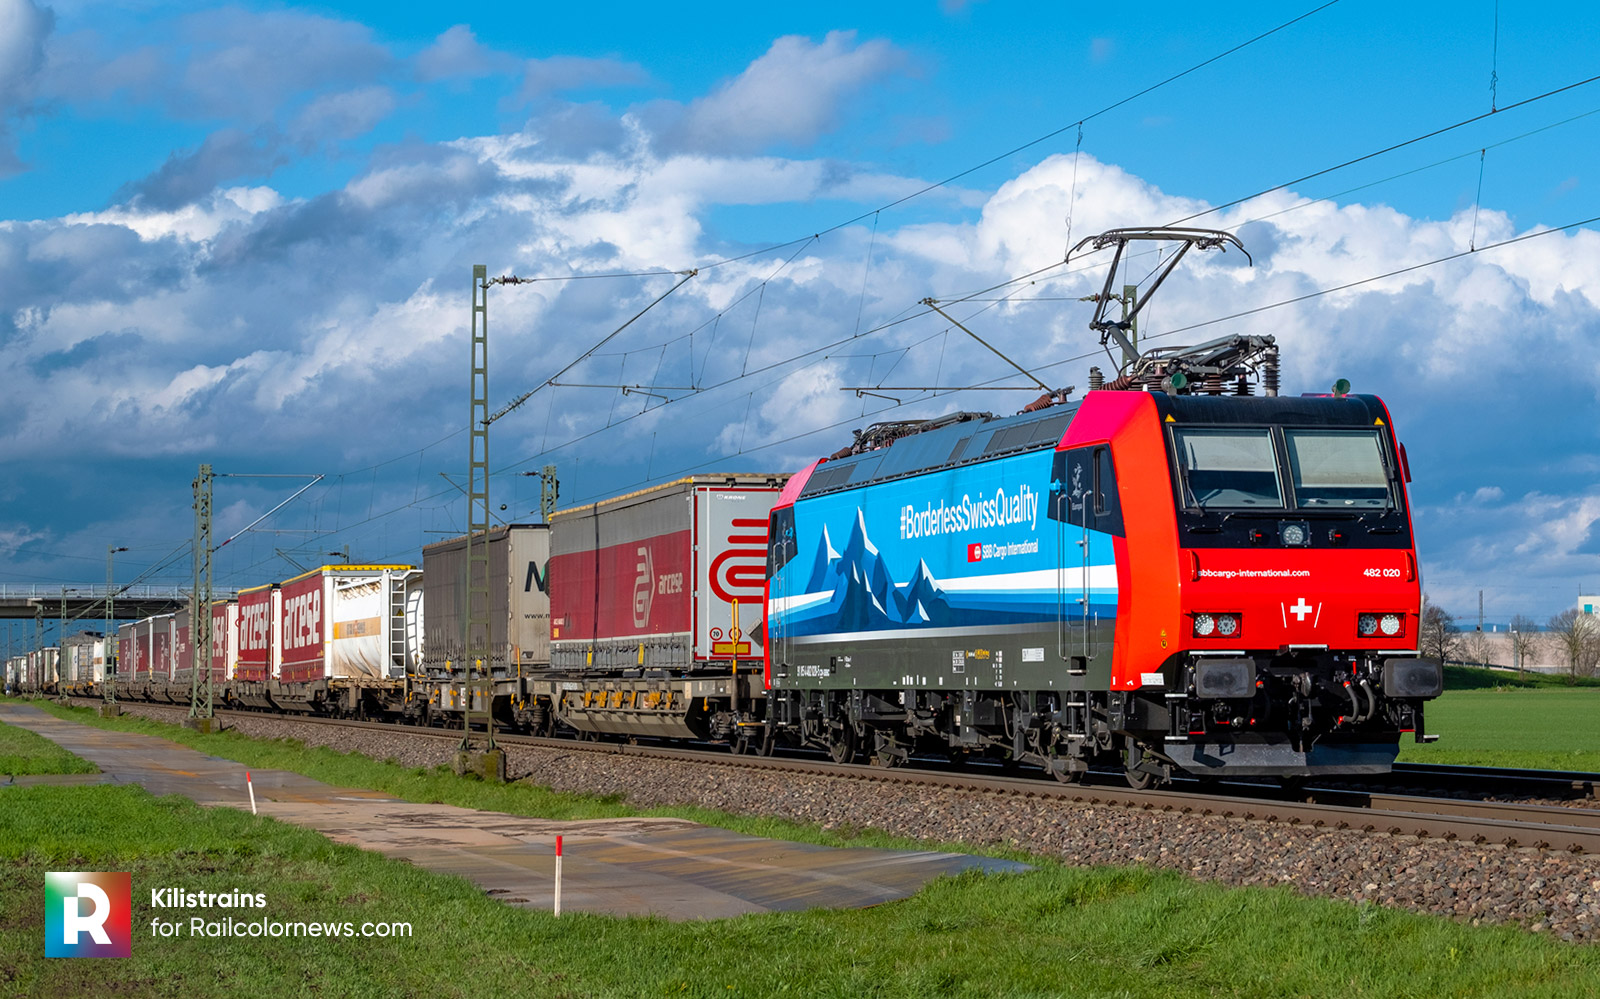 design] SBB Cargo 482 020 becomes part of the 'Alppiercer' family 